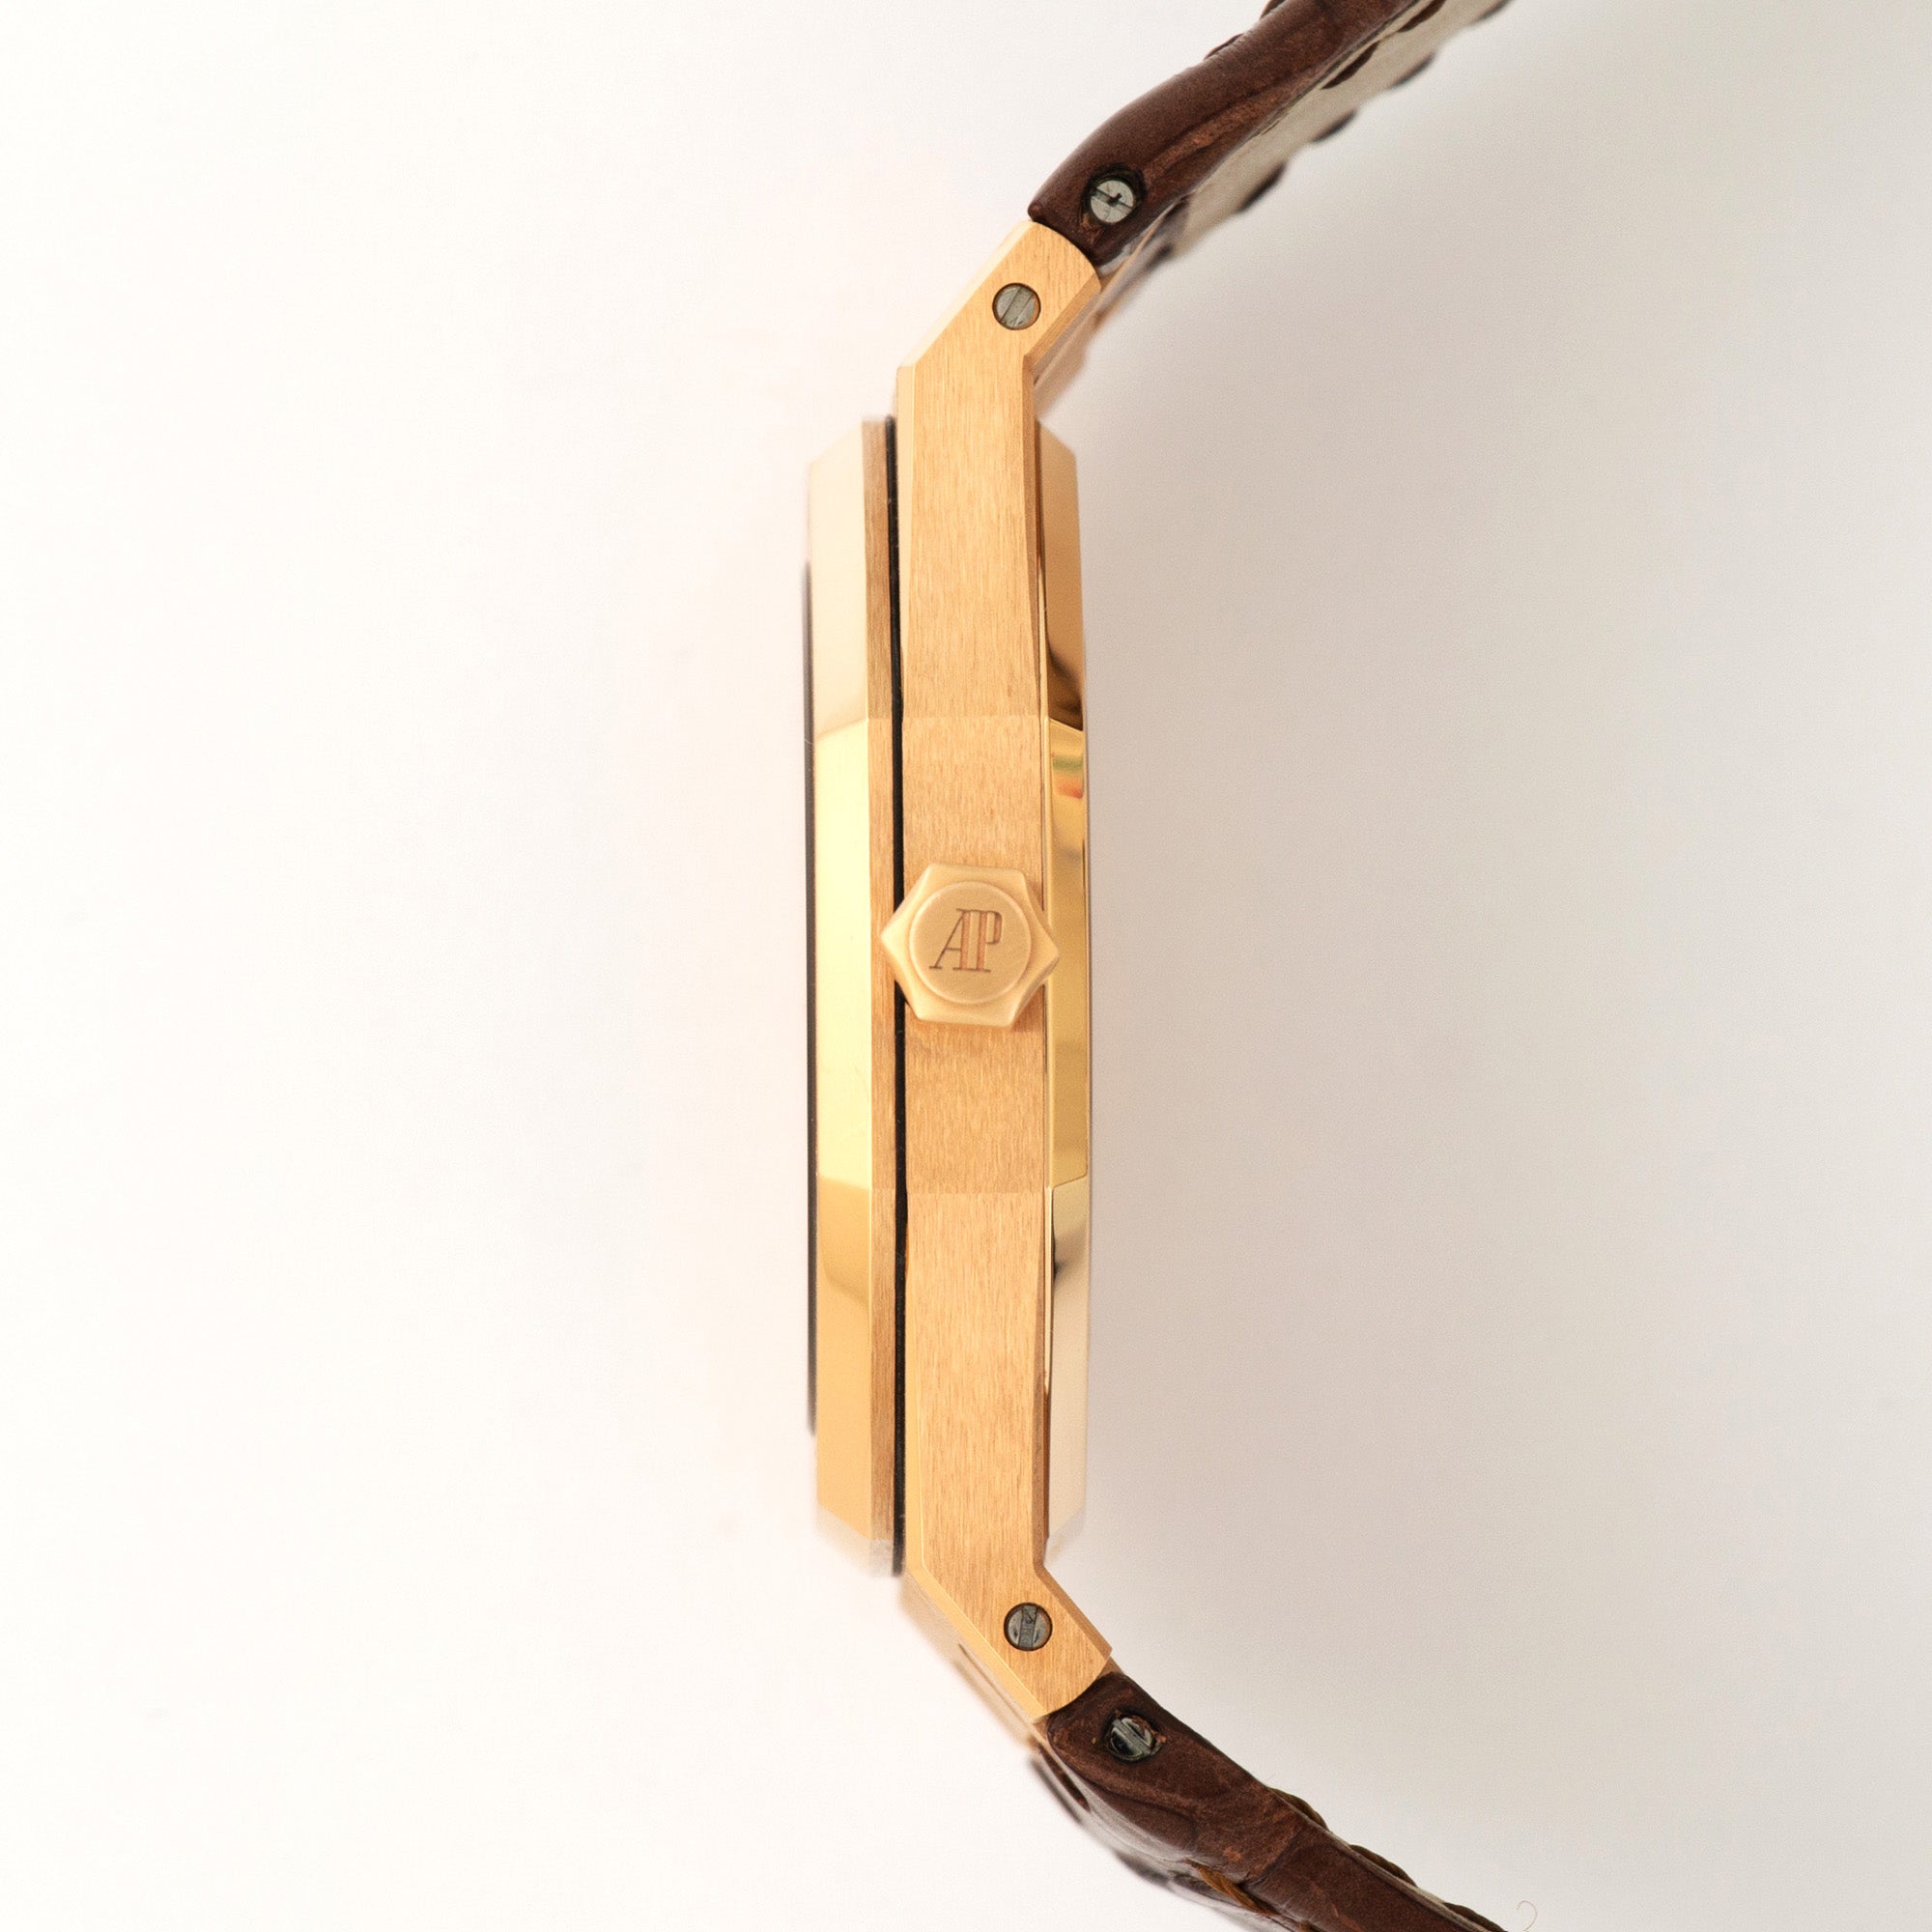 Audemars Piguet - Audemars Piguet Rose Gold Openworked Royal Oak Skeletonized Watch, Ref. 15305 - The Keystone Watches